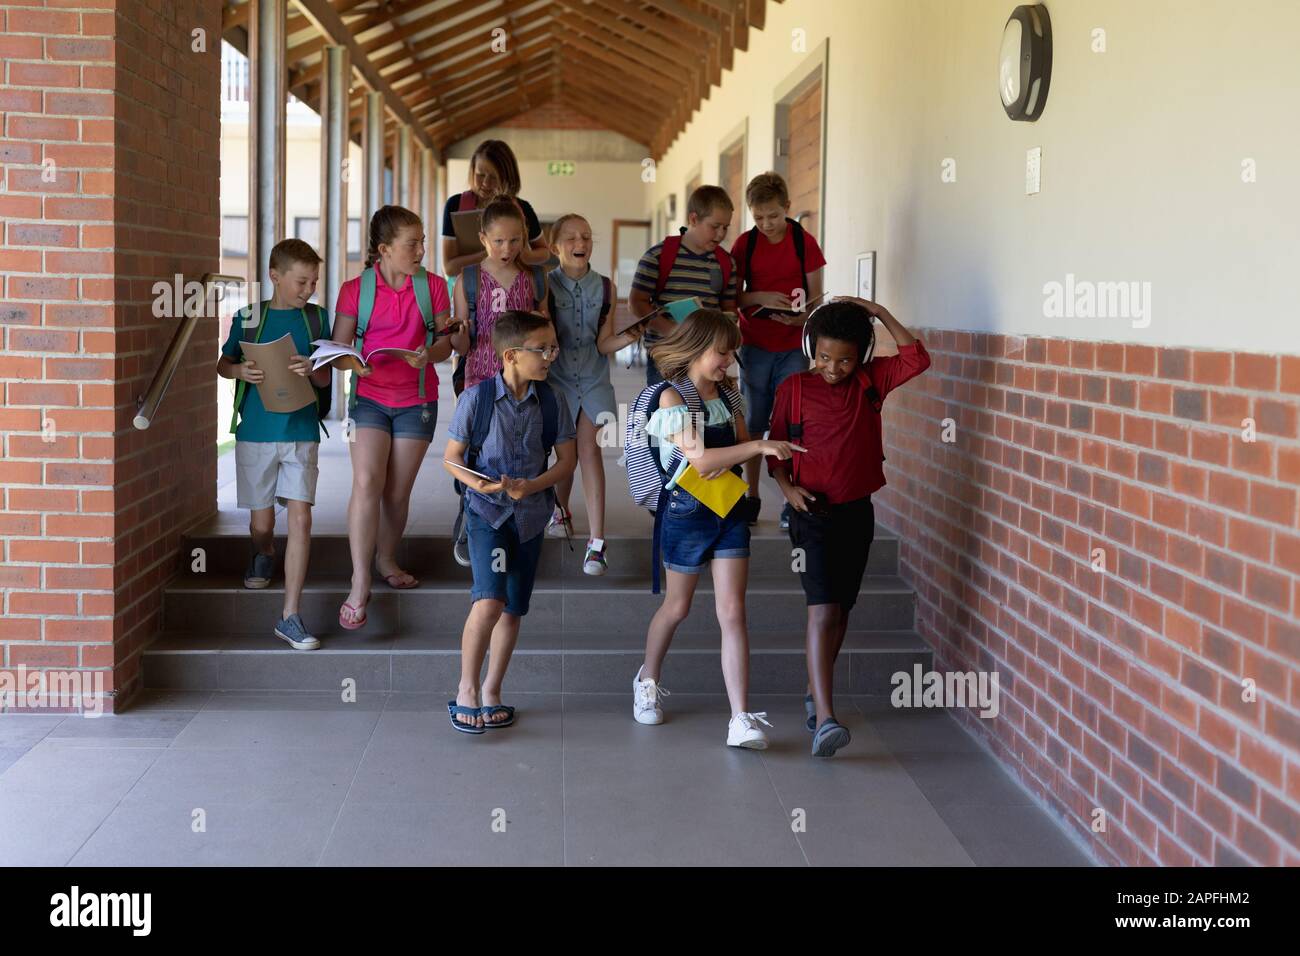 Group of school pupils walking in an outdoor corridor at elementary school Stock Photo